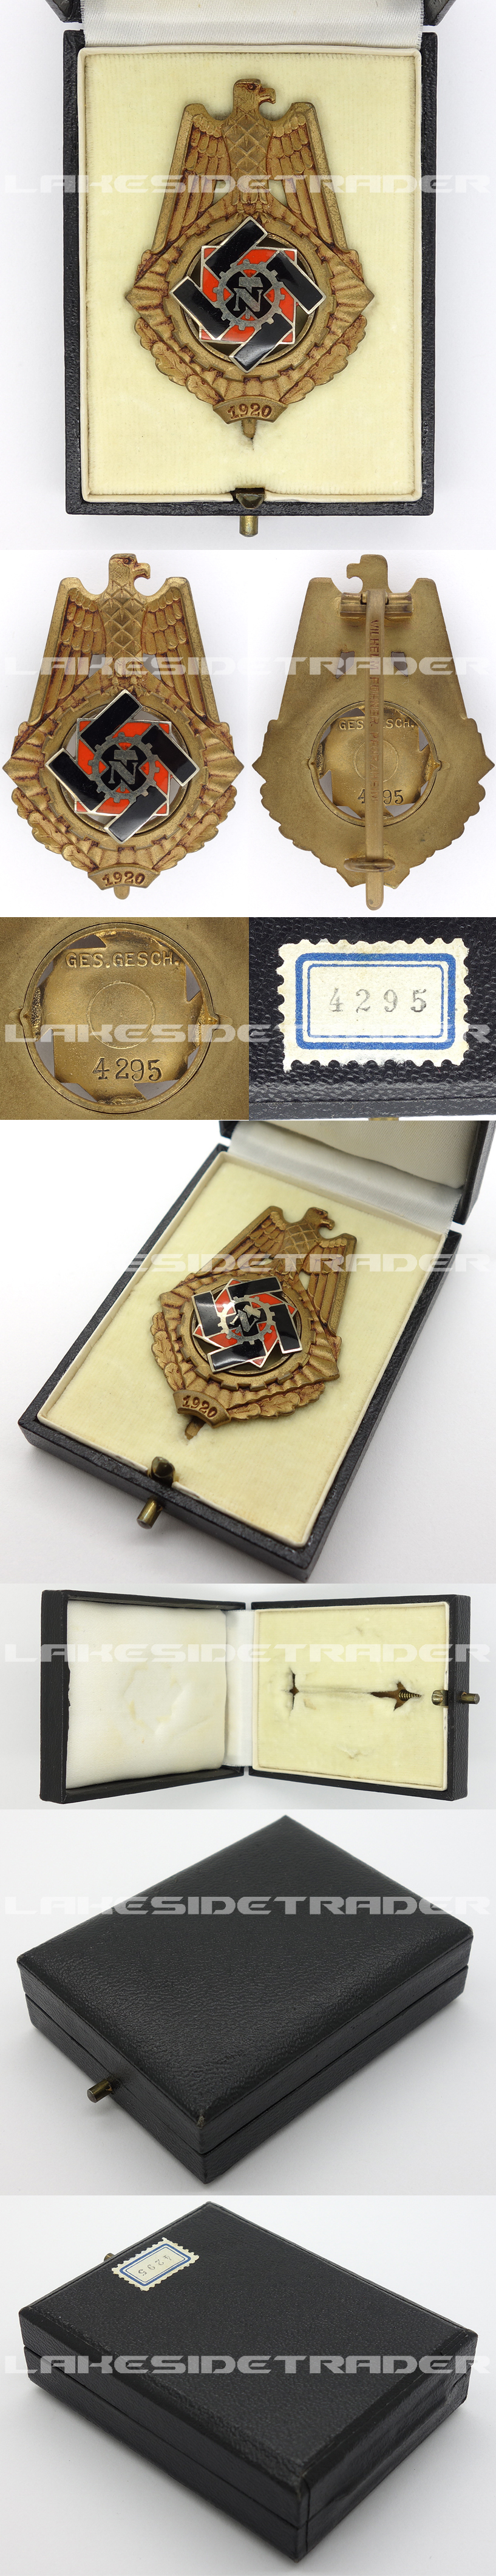 Matching Cased TENO Honor Award 1920